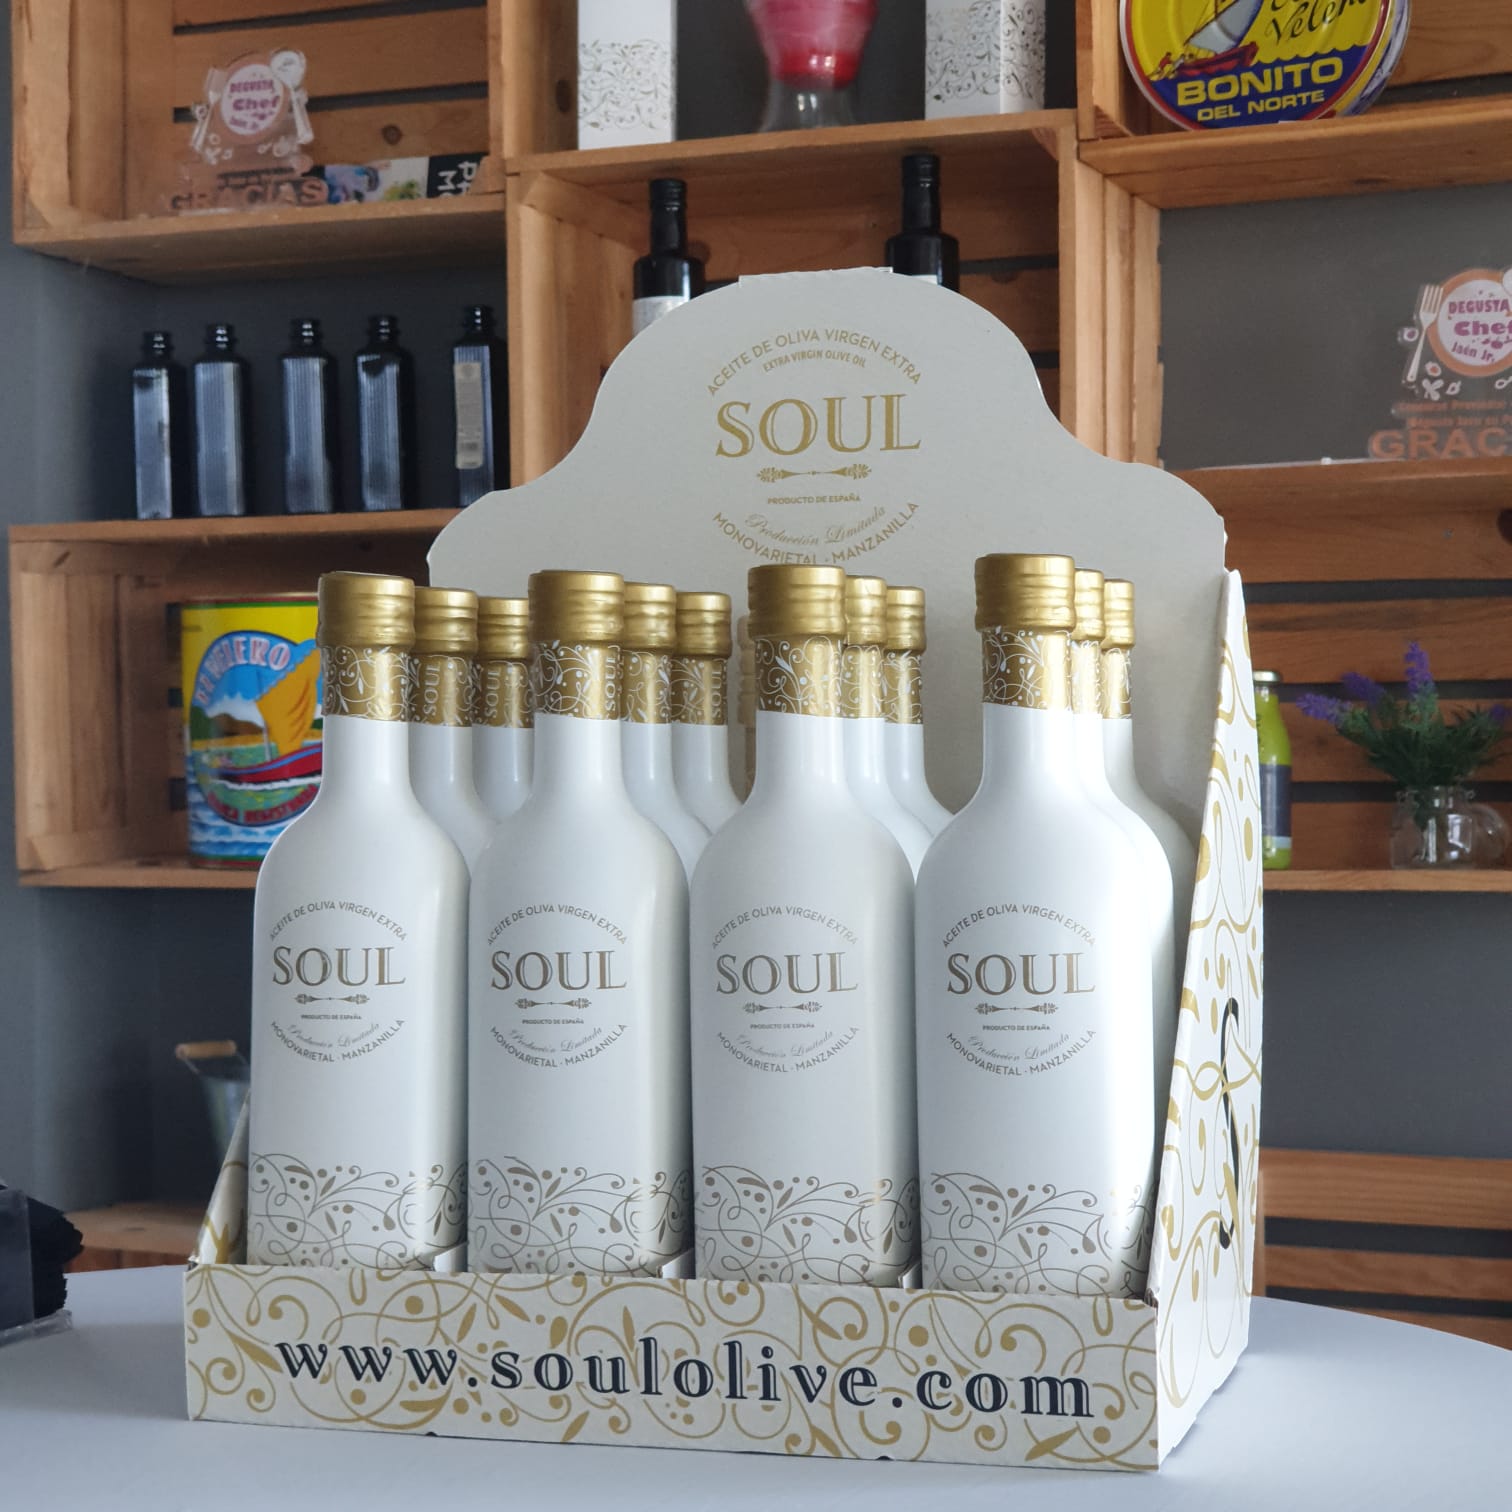 Nuevo Expositor Soul Olive